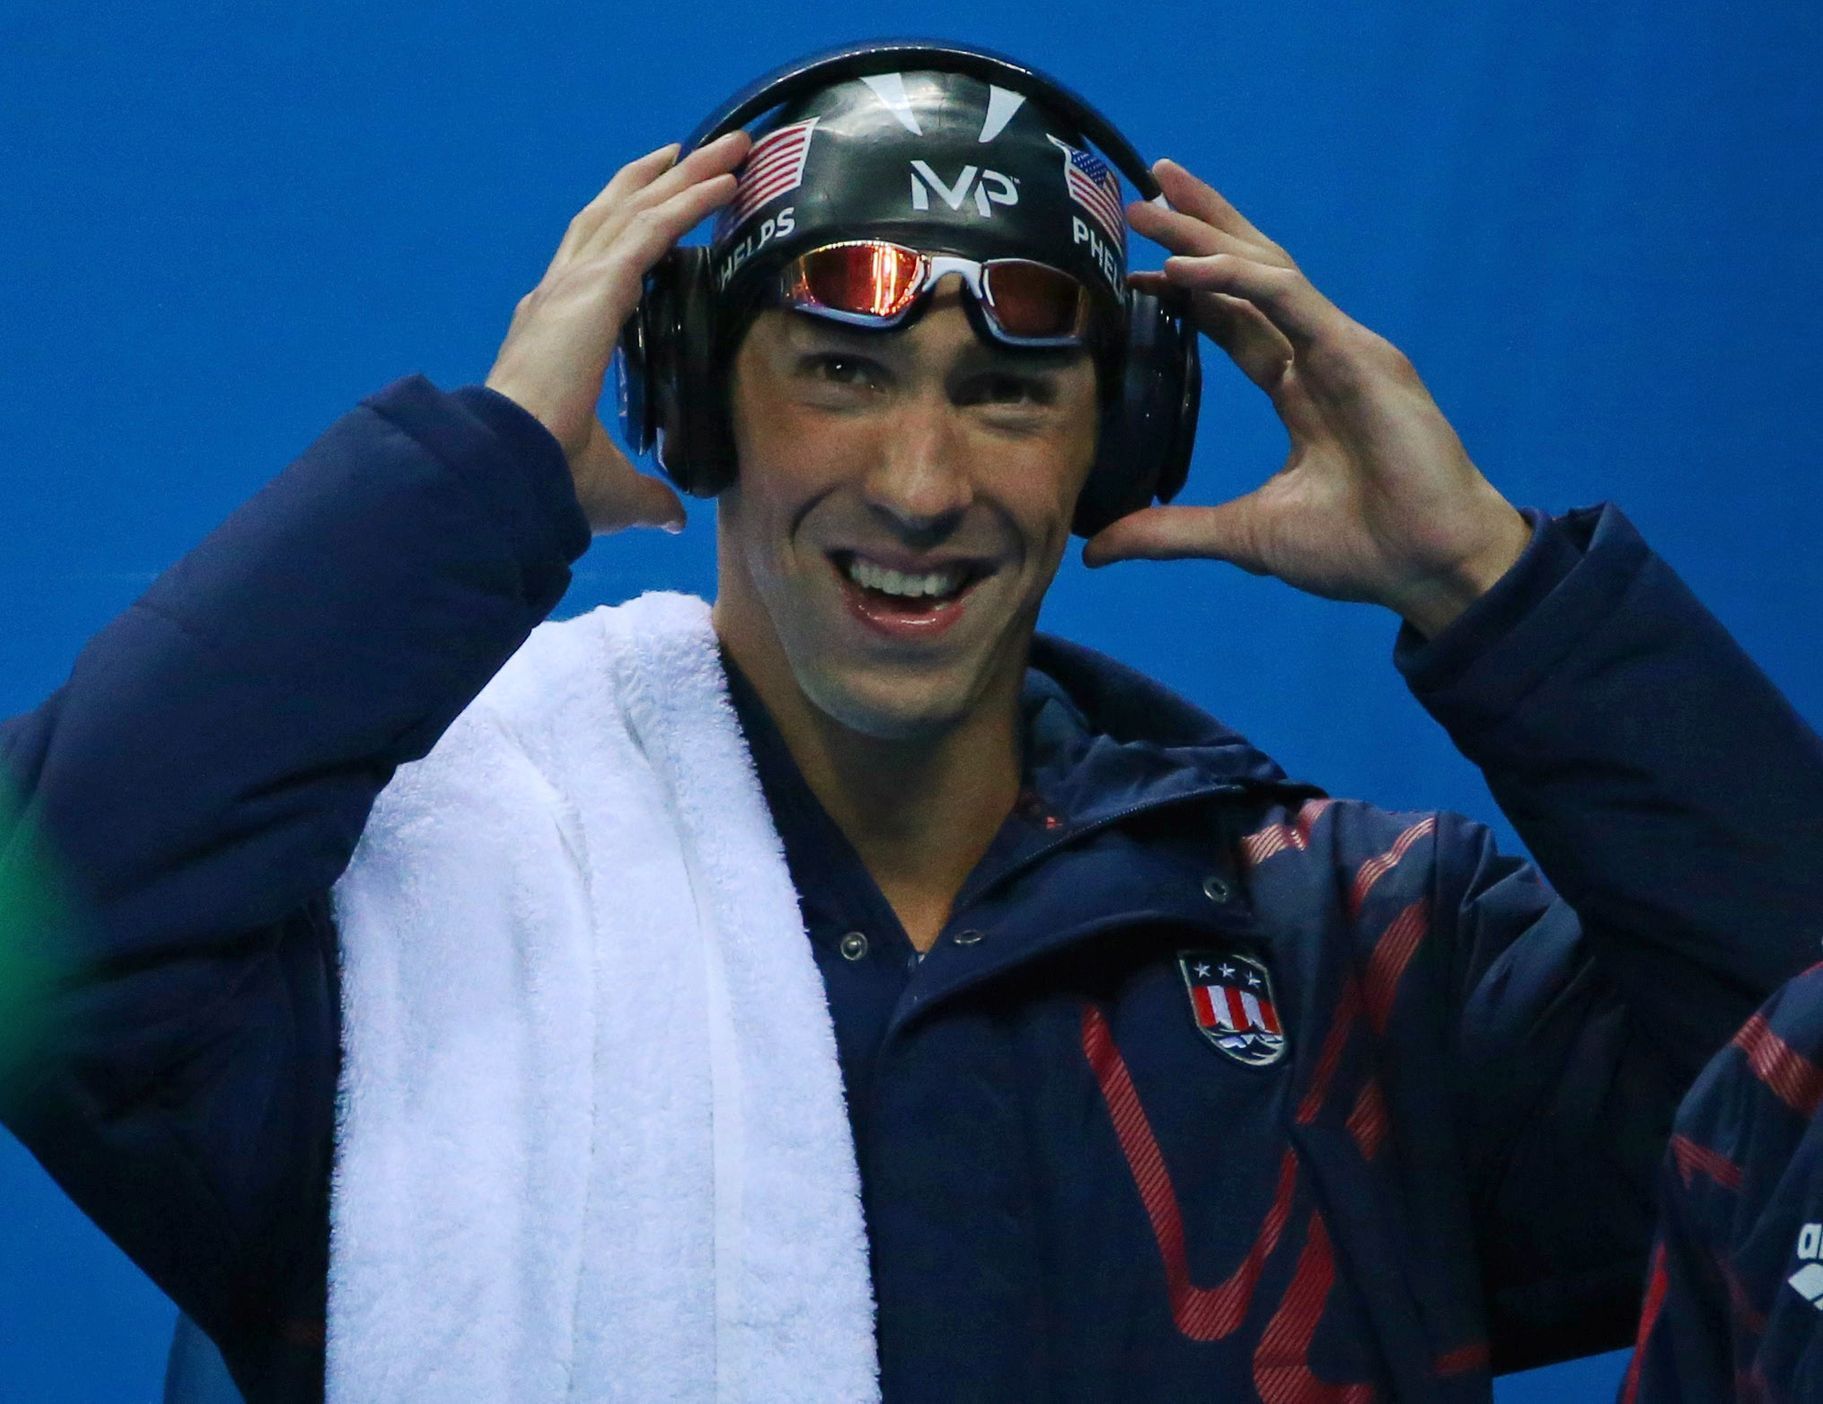 OH 2016, plavání: Michael Phelps